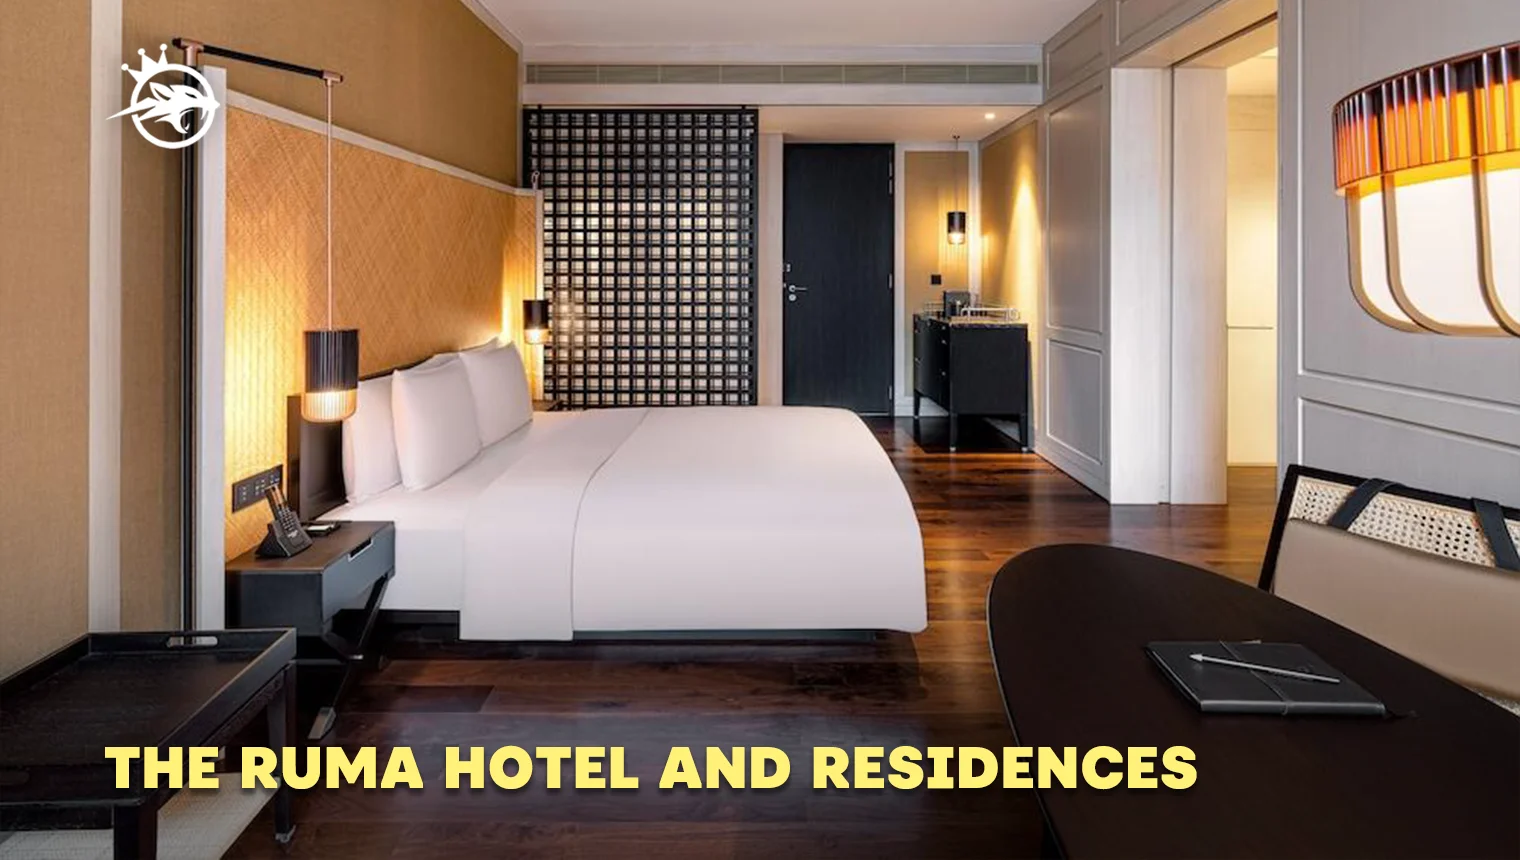 The RuMa Hotel and Residences